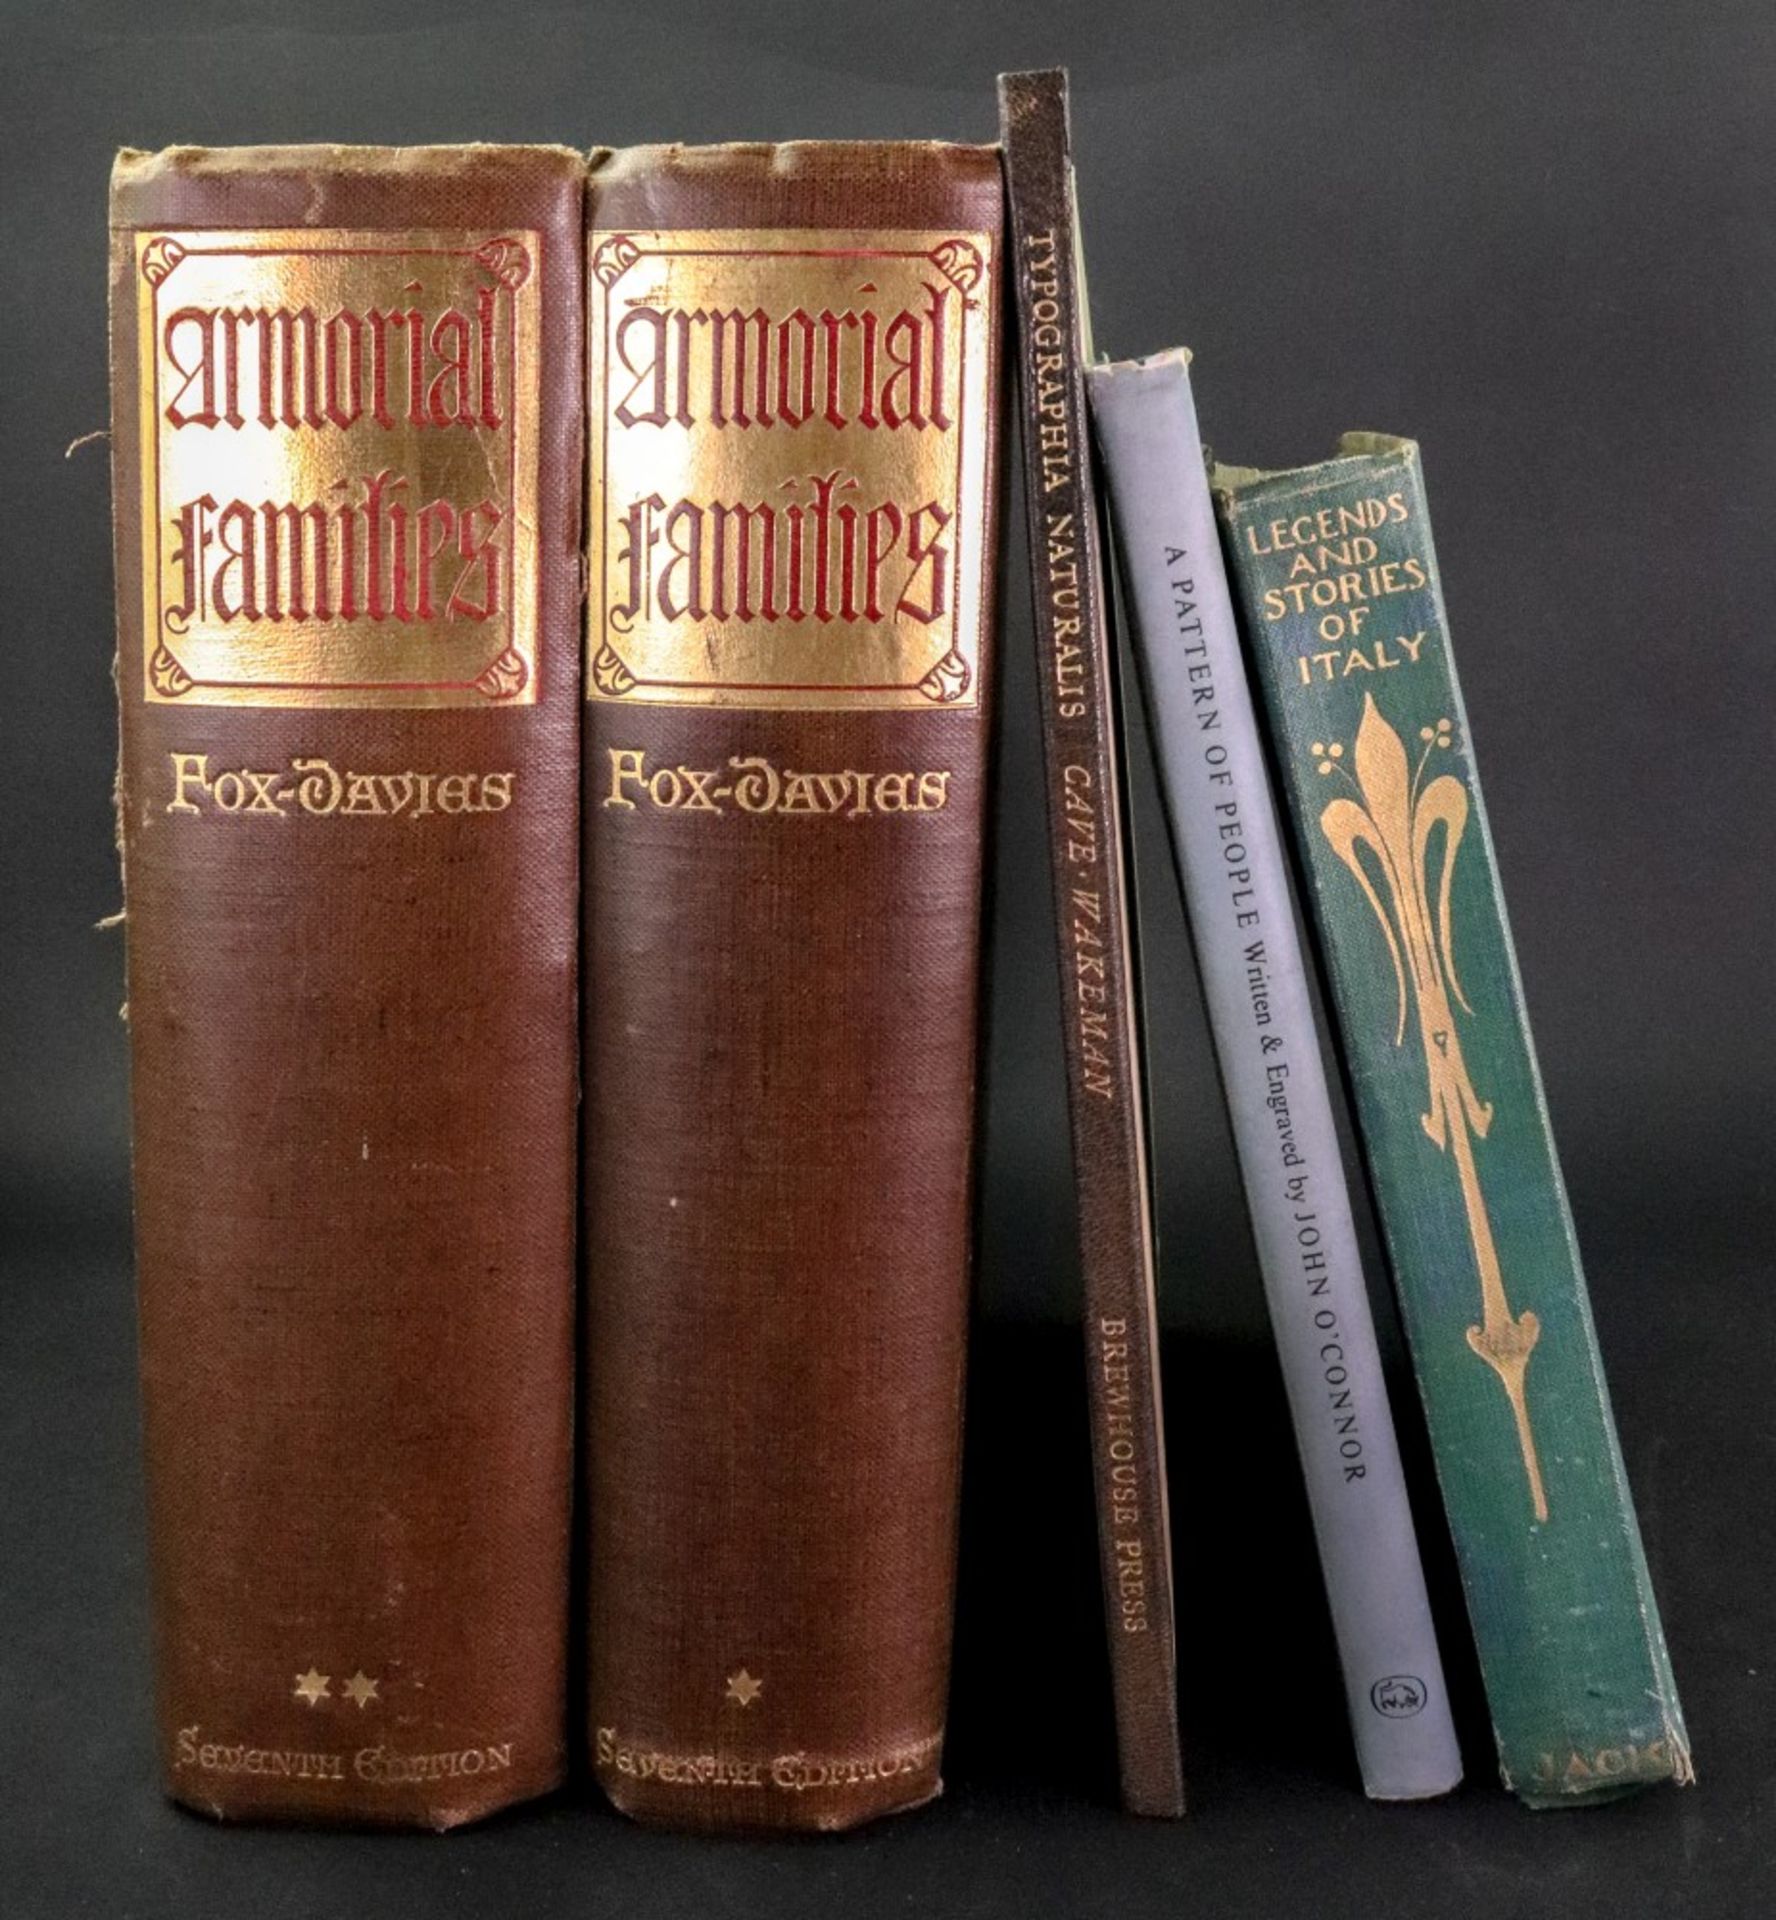 FOX DAVIES (Arthur Charles) Armorial Families, 7th edition, 1929 & 30, 2 volumes, cloth,